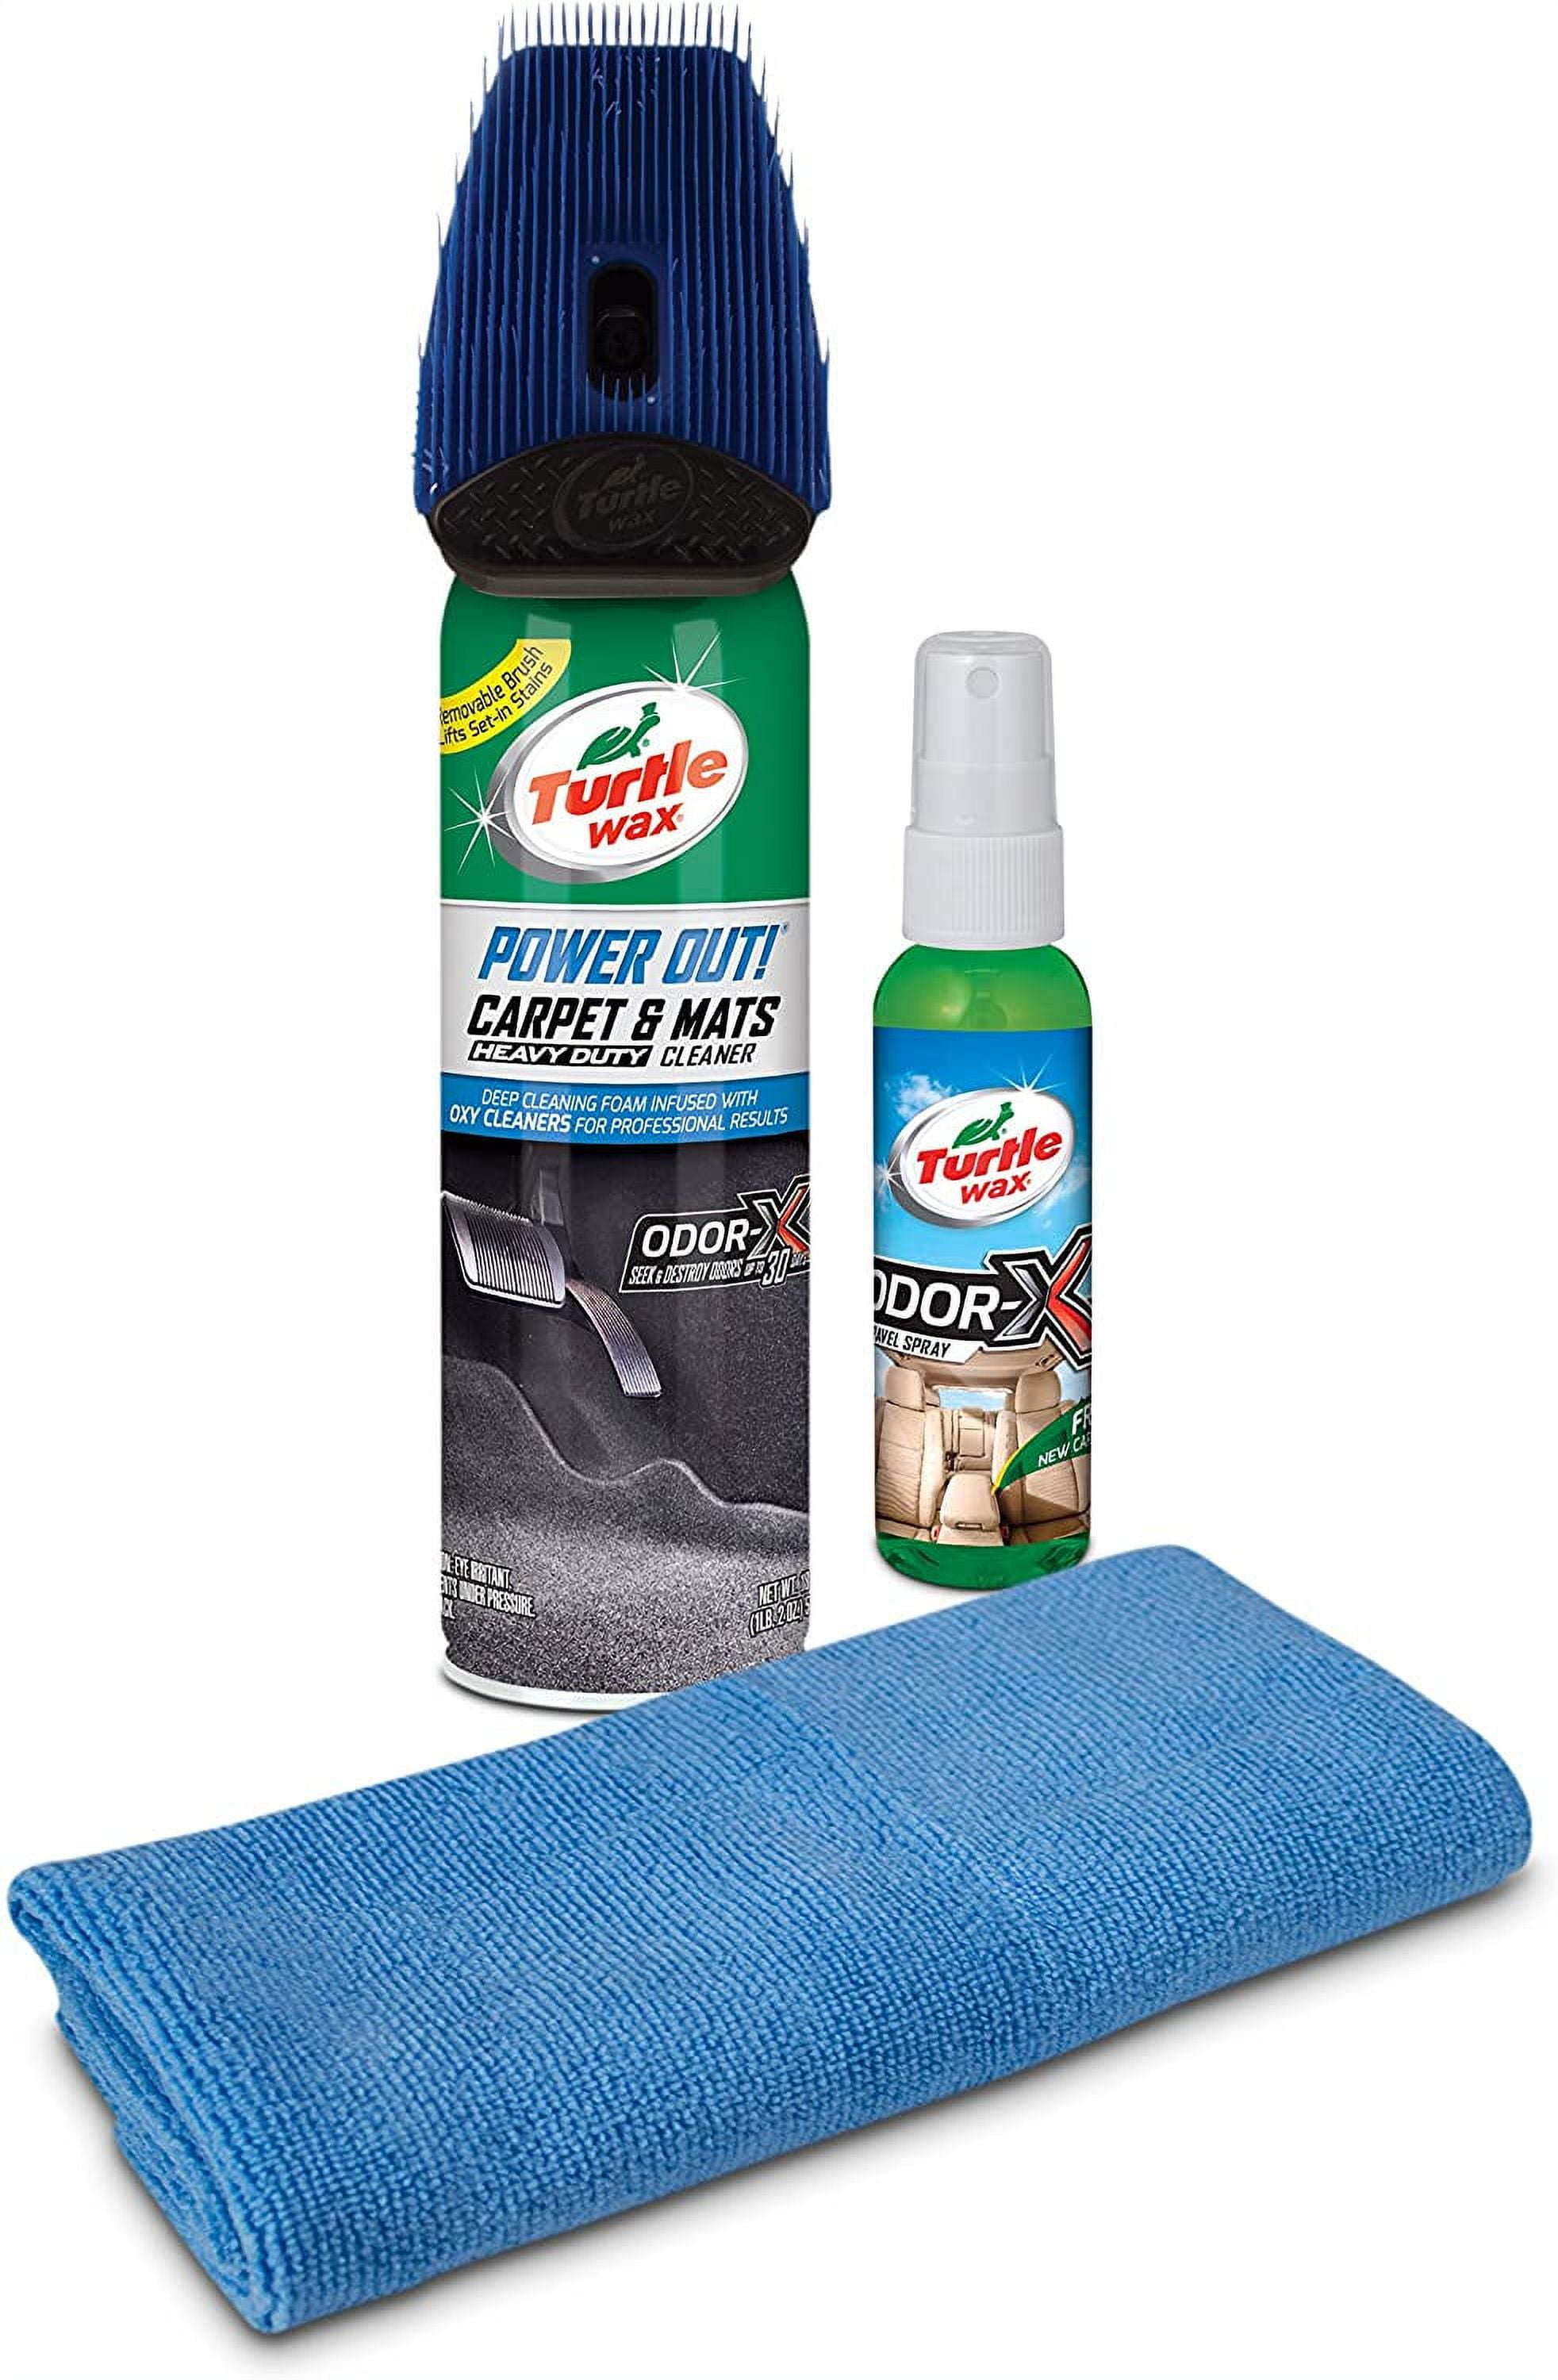 Dry Foam Auto Carpet Cleaner - Best Car Carpet Cleaner for Auto Detailing